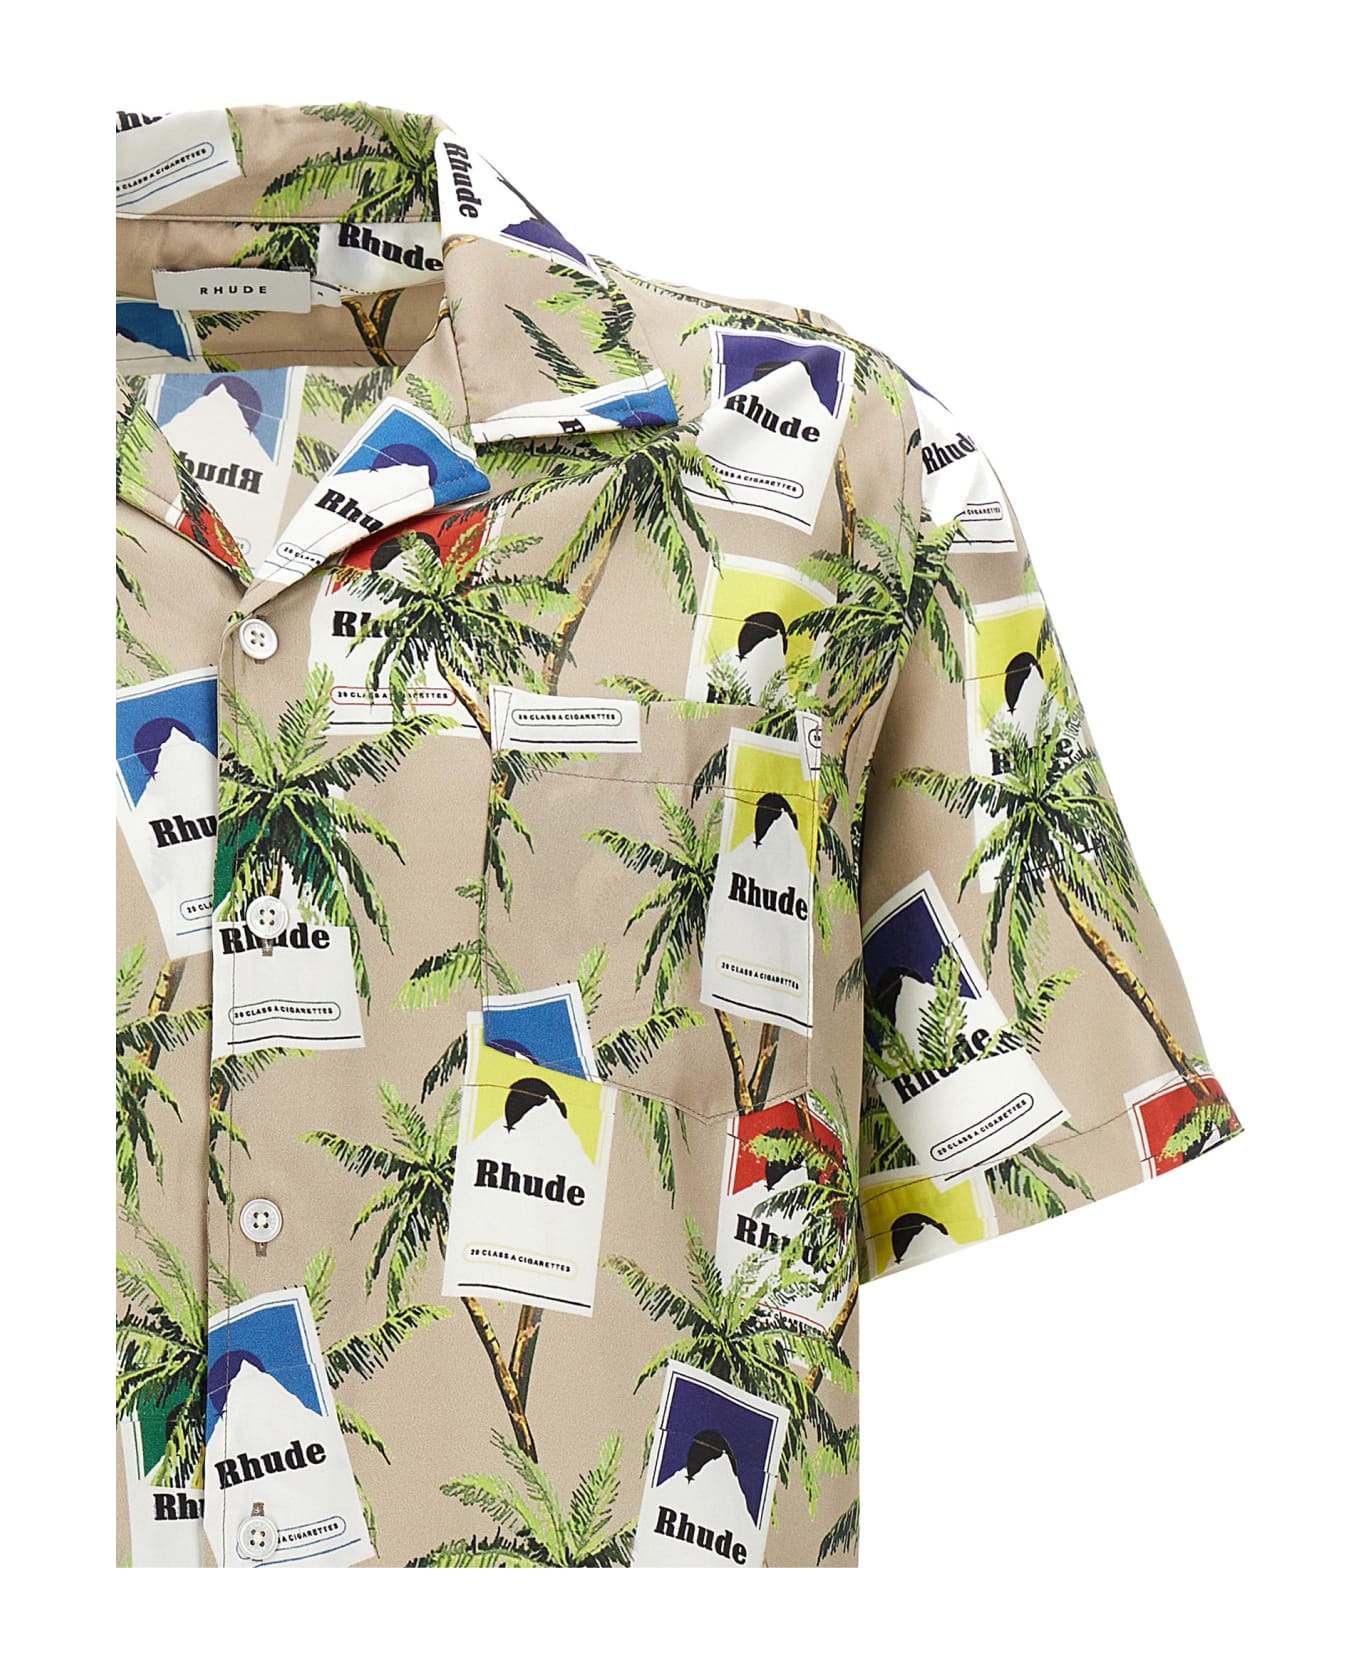 Rhude 'cigarette' Shirt - Multicolor